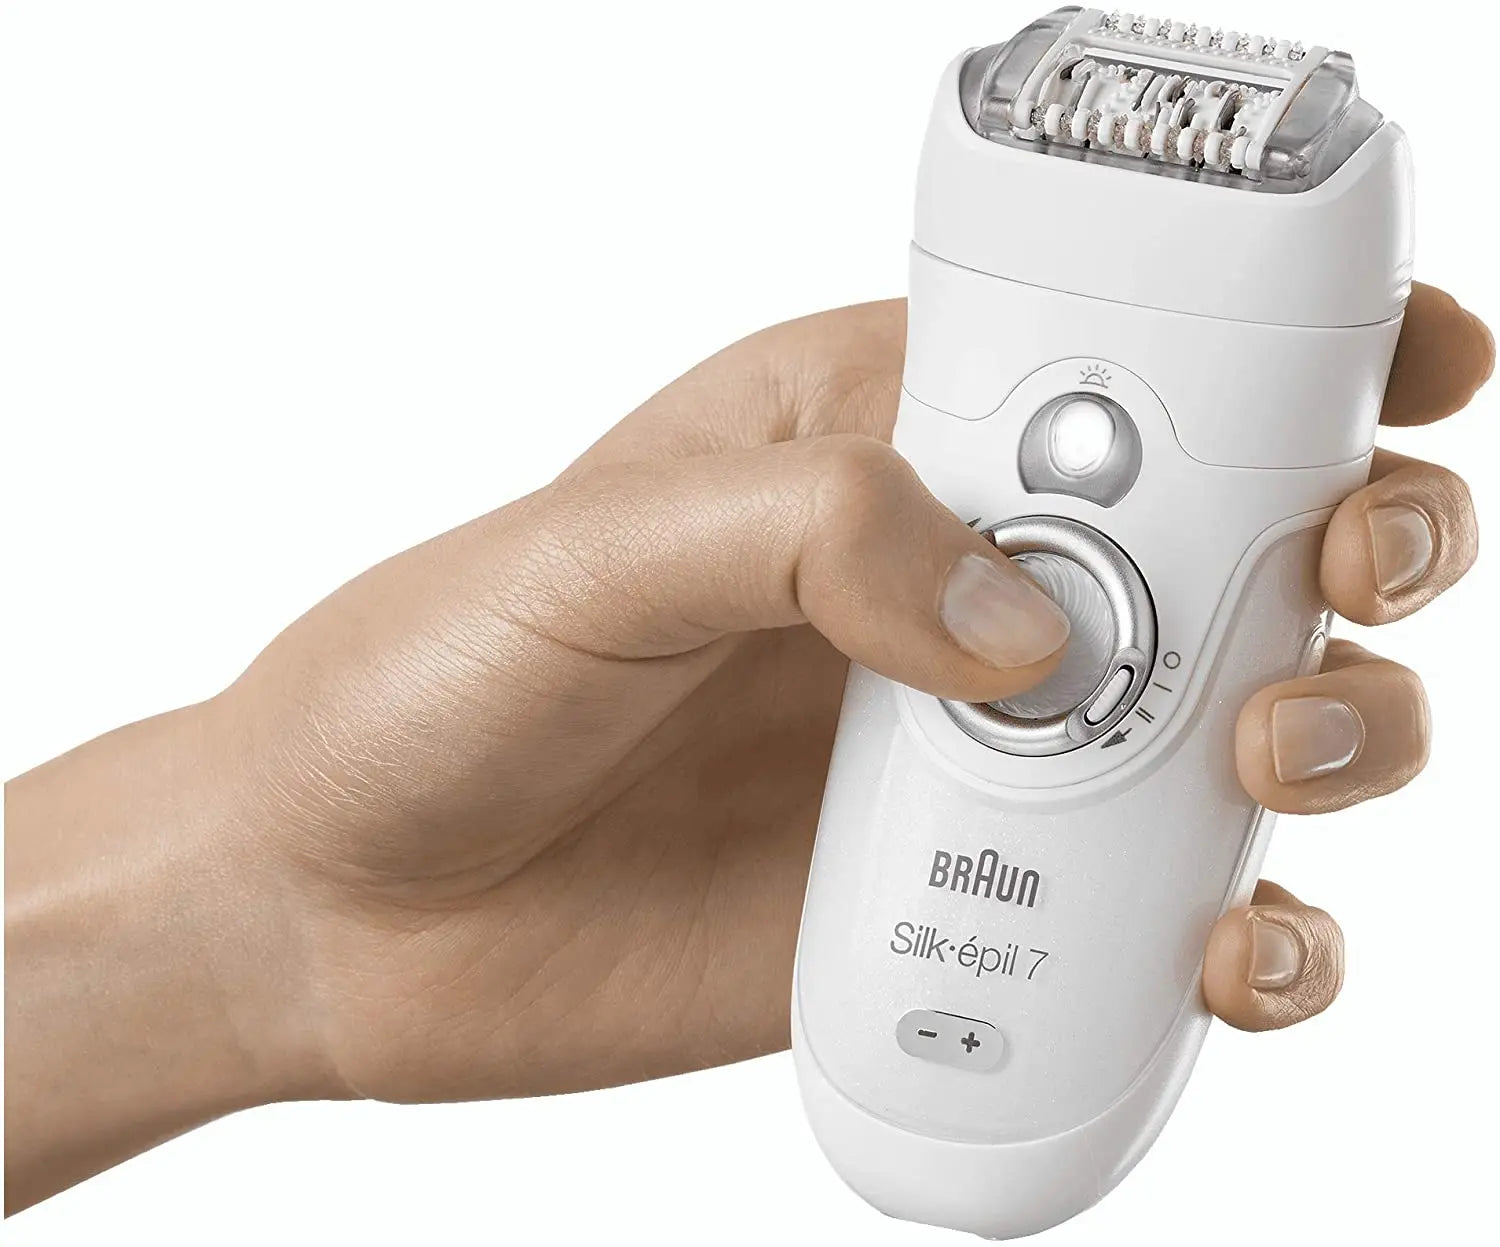 Braun silk epil 7 ماكينة  سيلك إيبل 7 اللاسلكية لإزالة الشعر الزائد للاستخدام الجاف والرطب طراز 7-561 رمادي SASHOPDZ